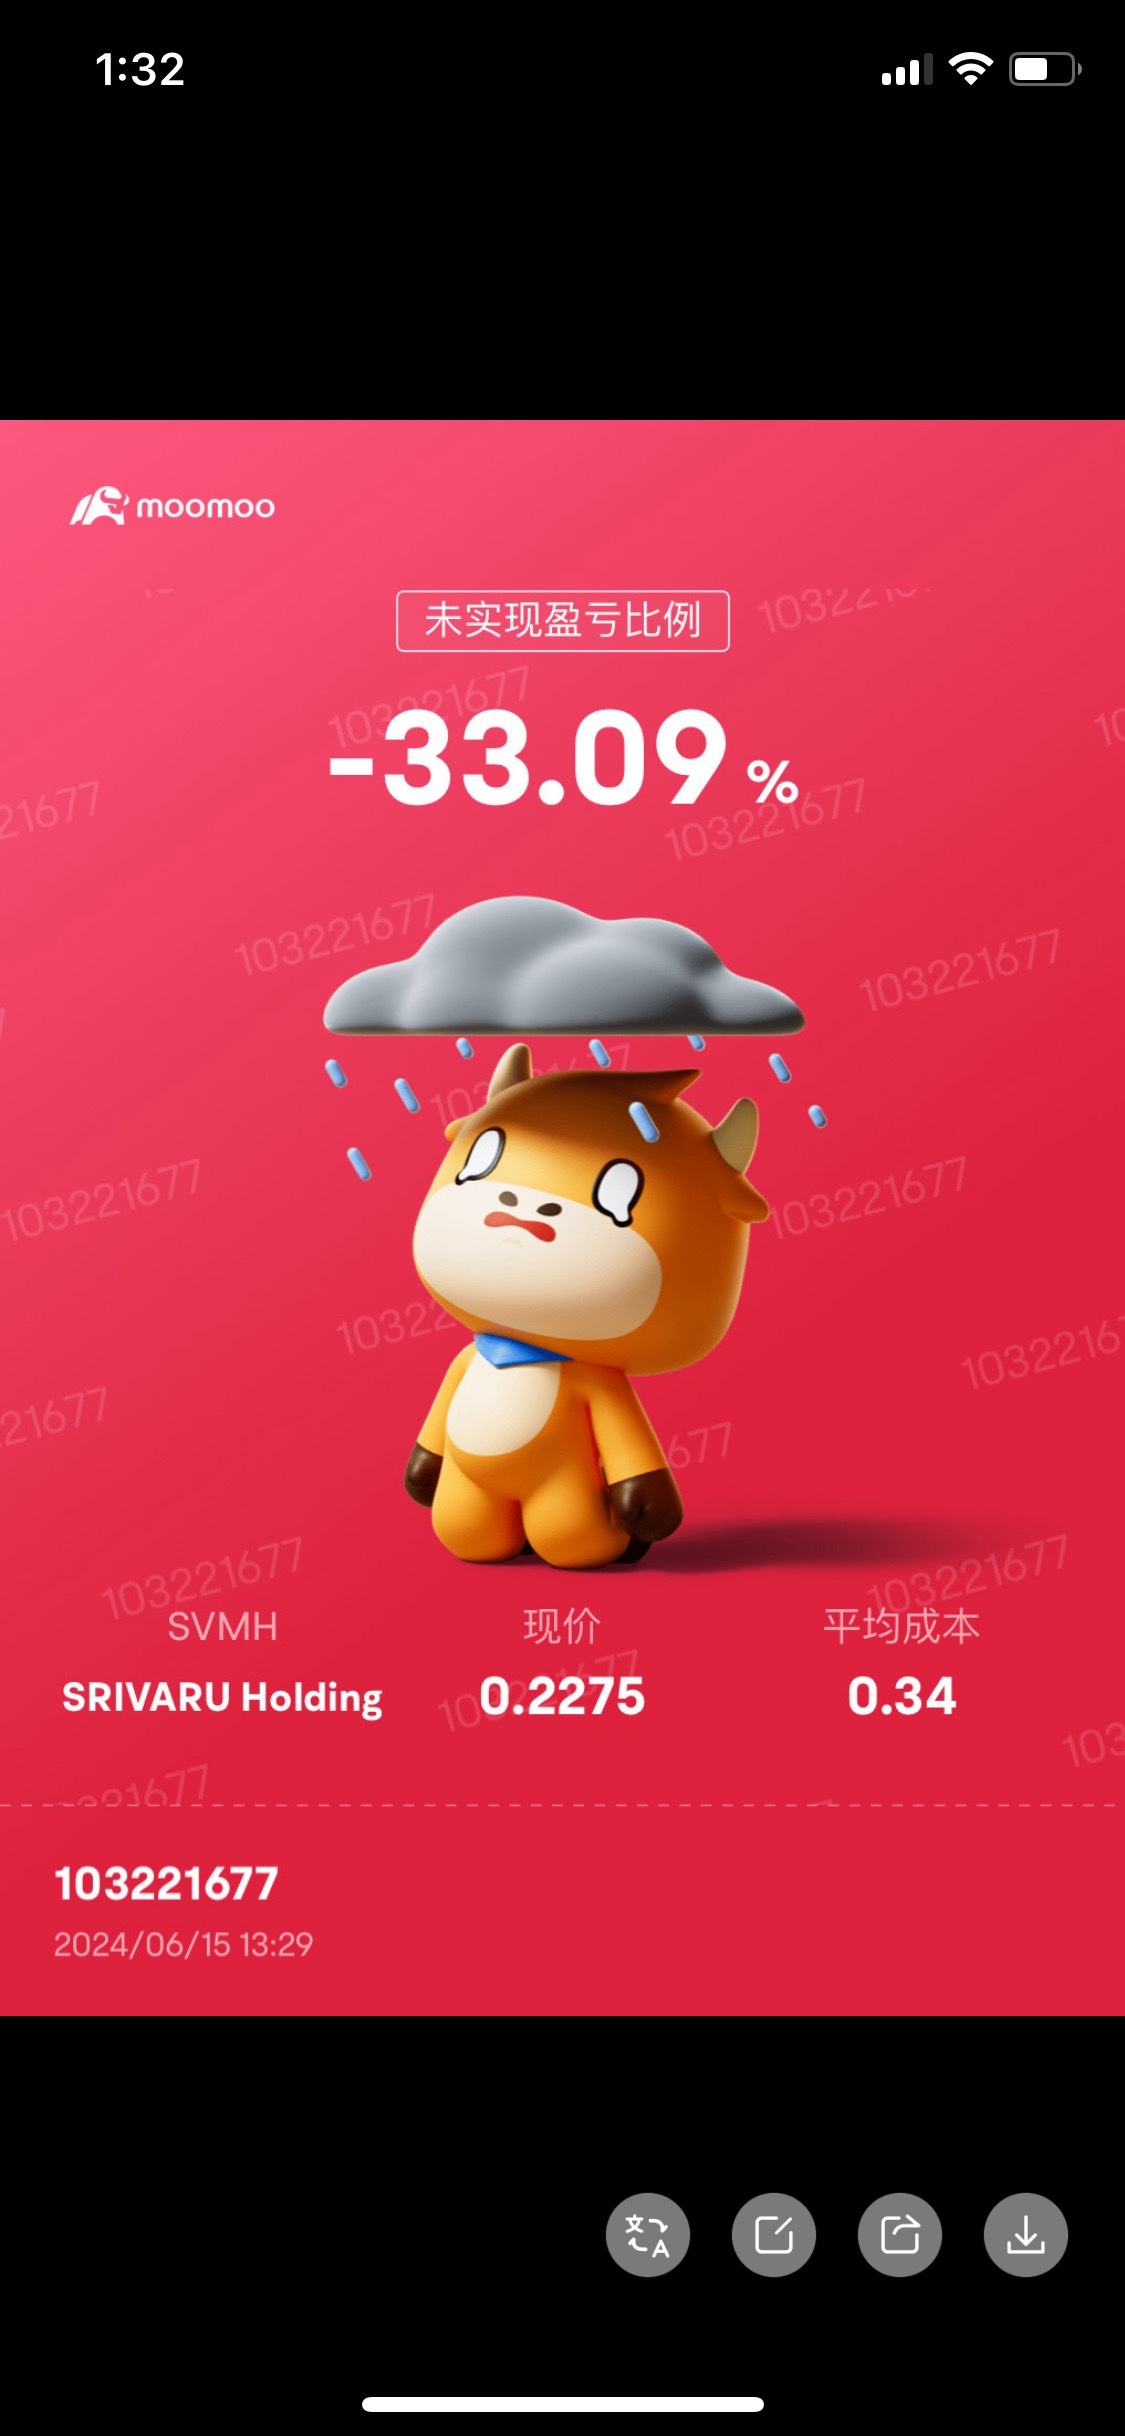 $SRIVARU Holding (SVMH.US)$ Damn it's not sold at 0.40